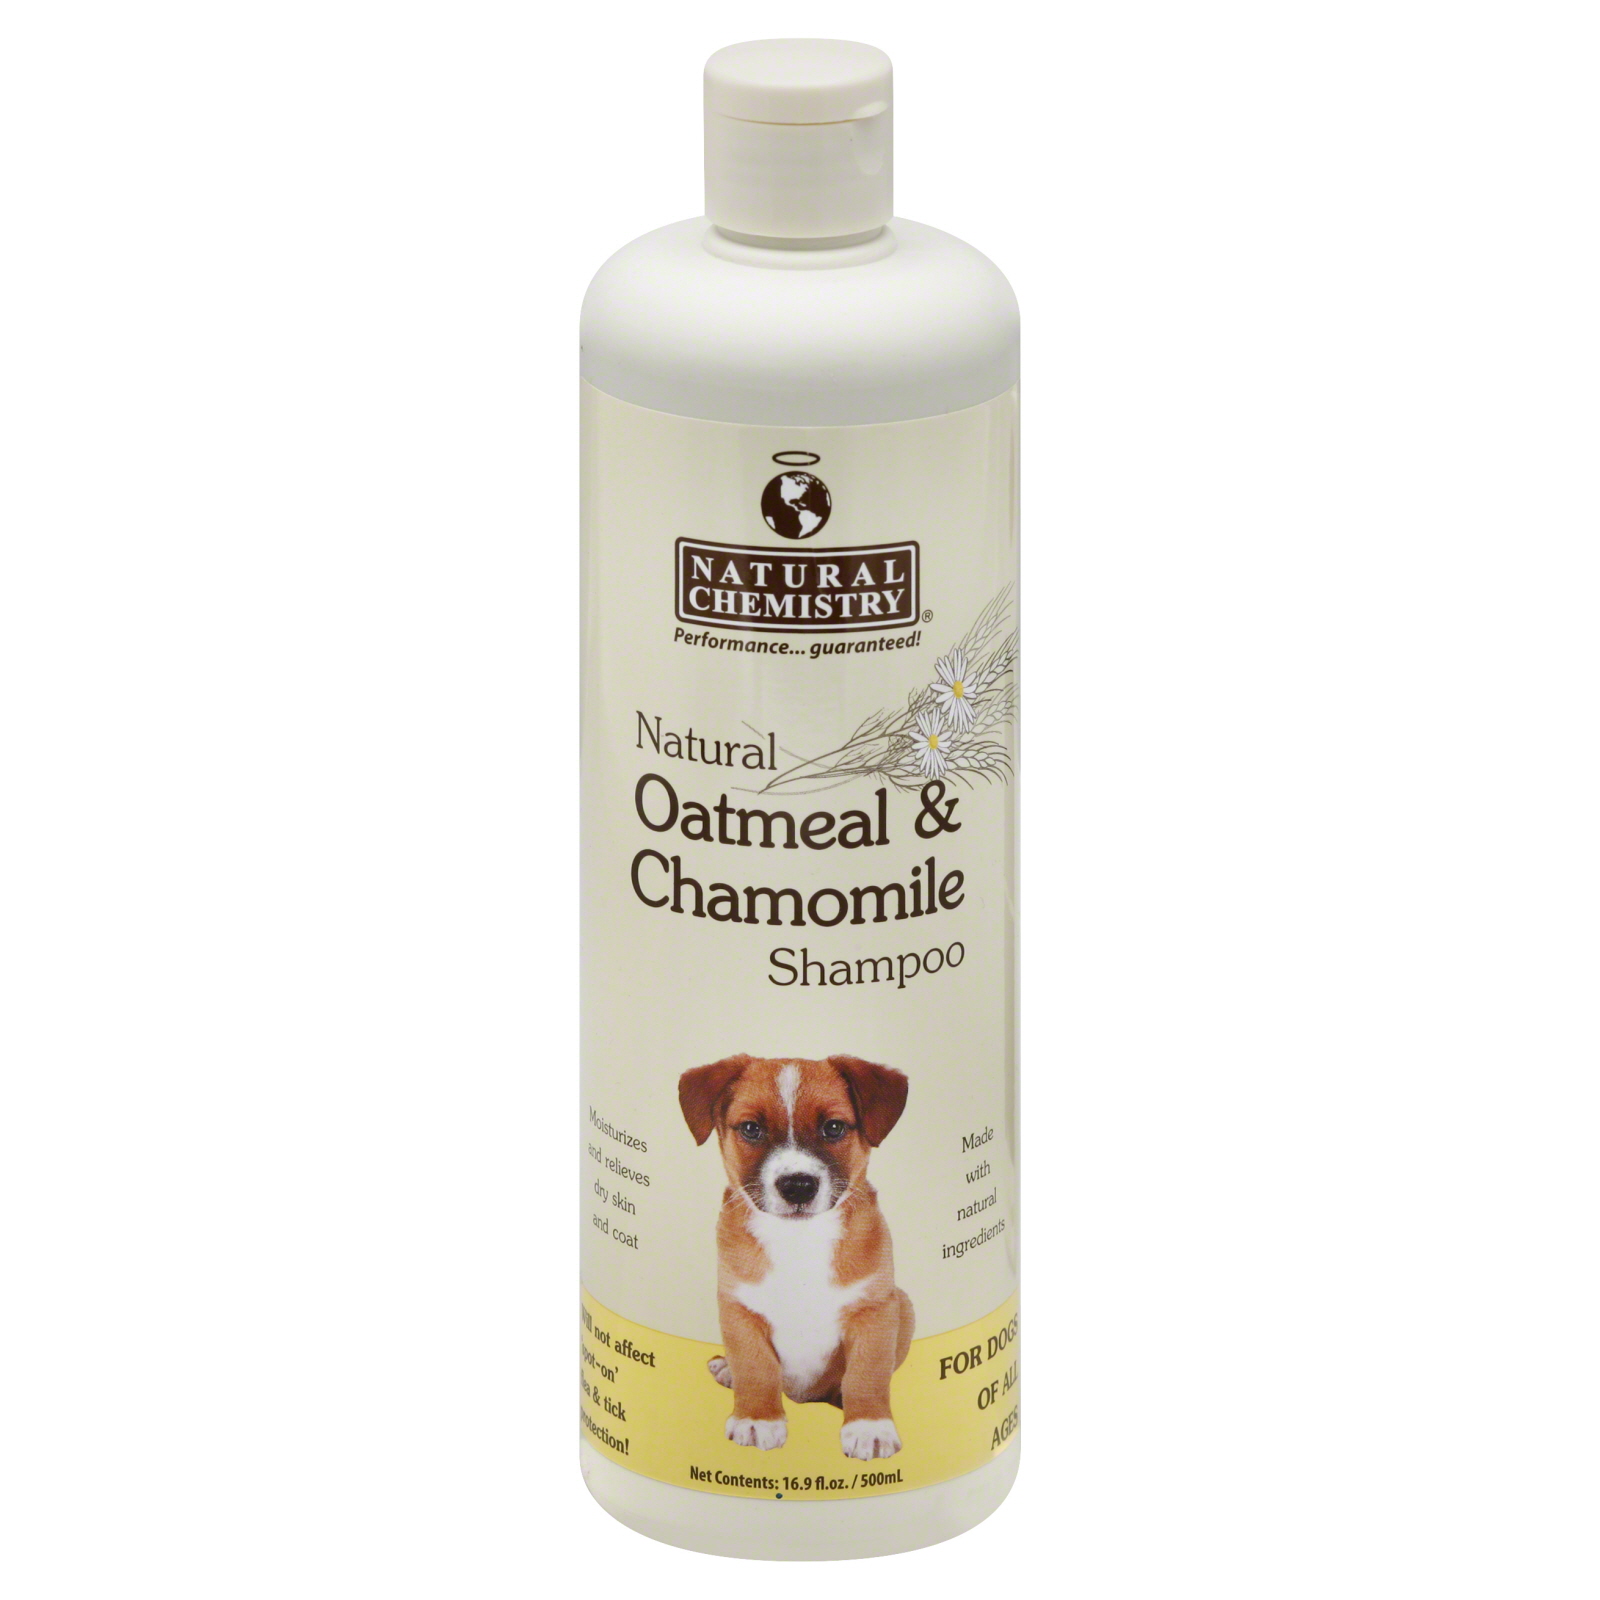 Natural Oatmeal & Chamomile Shampoo 16.9oz